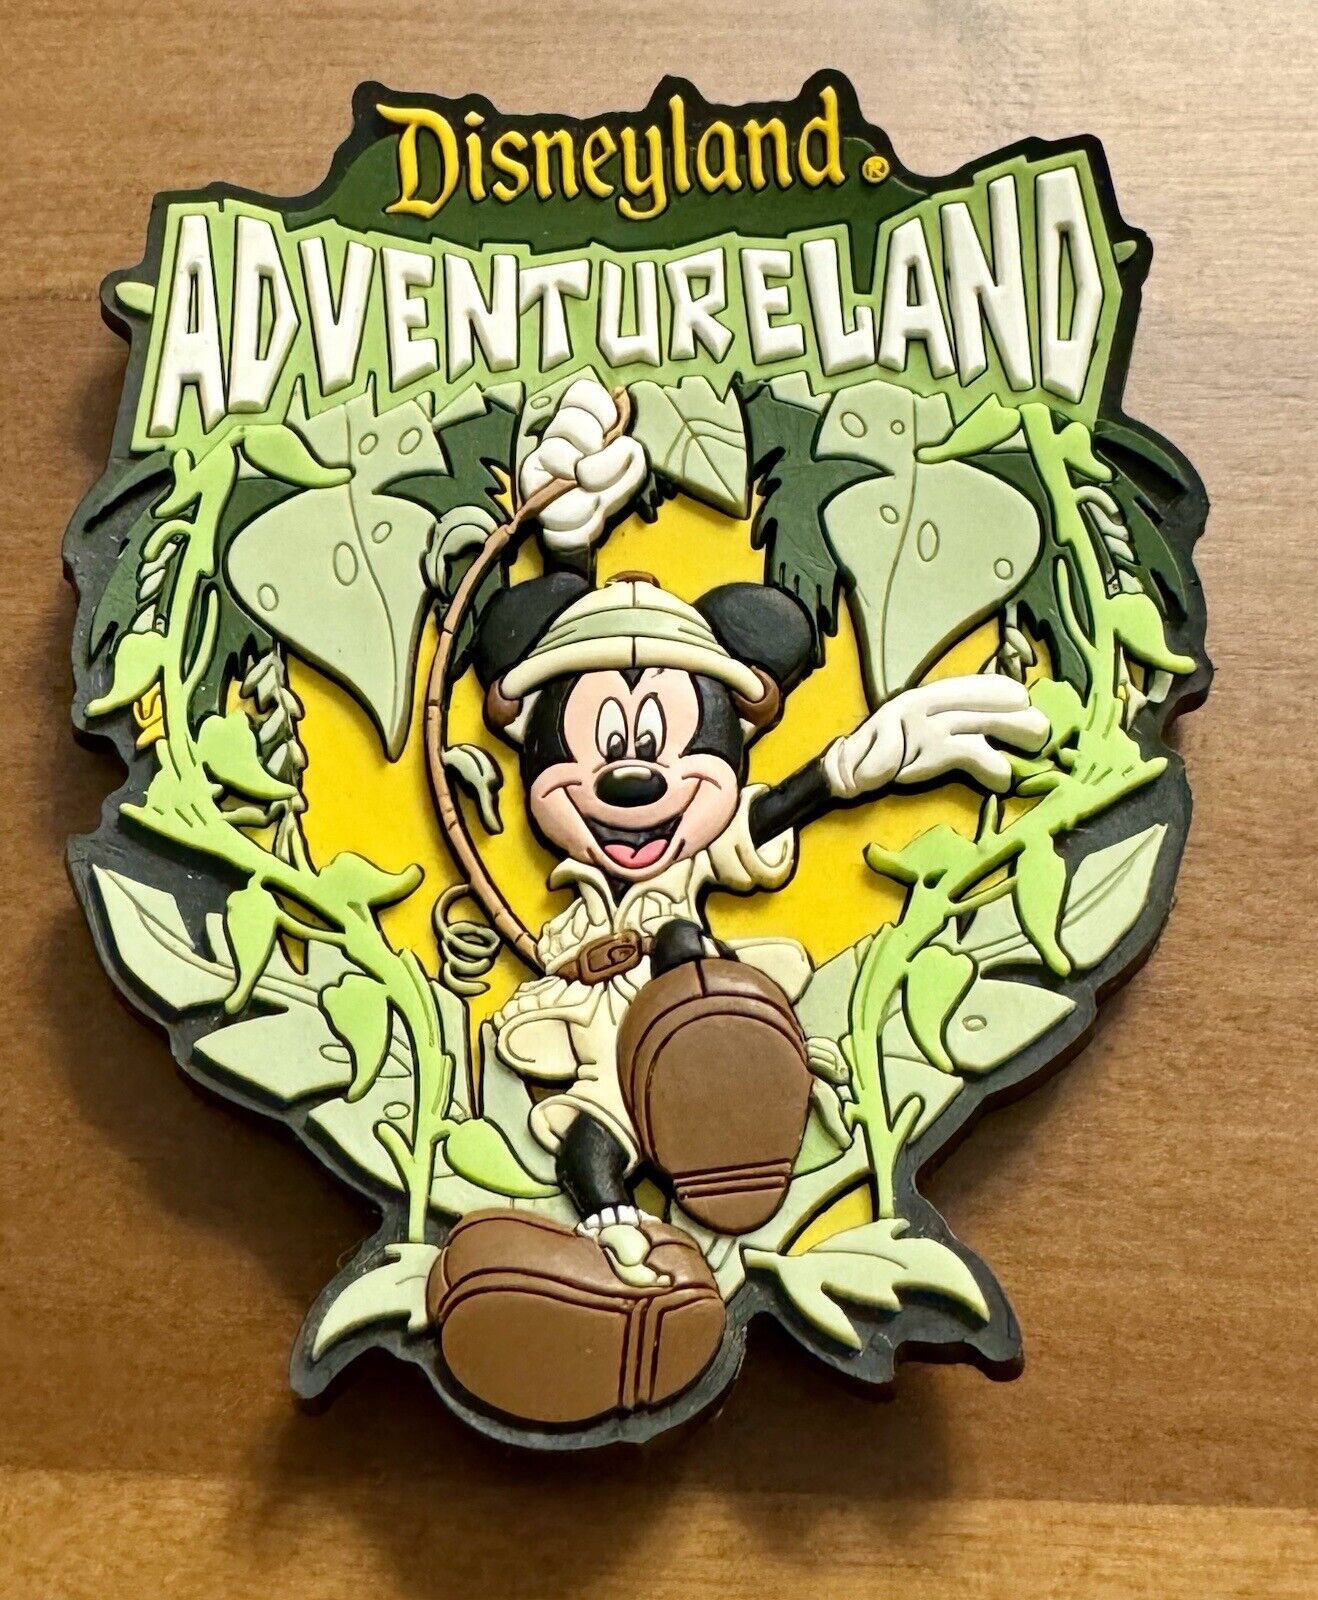 VTG Disneyland Adventureland Indiana Jones Mickey Mouse Disney Fridge Magnet HTF